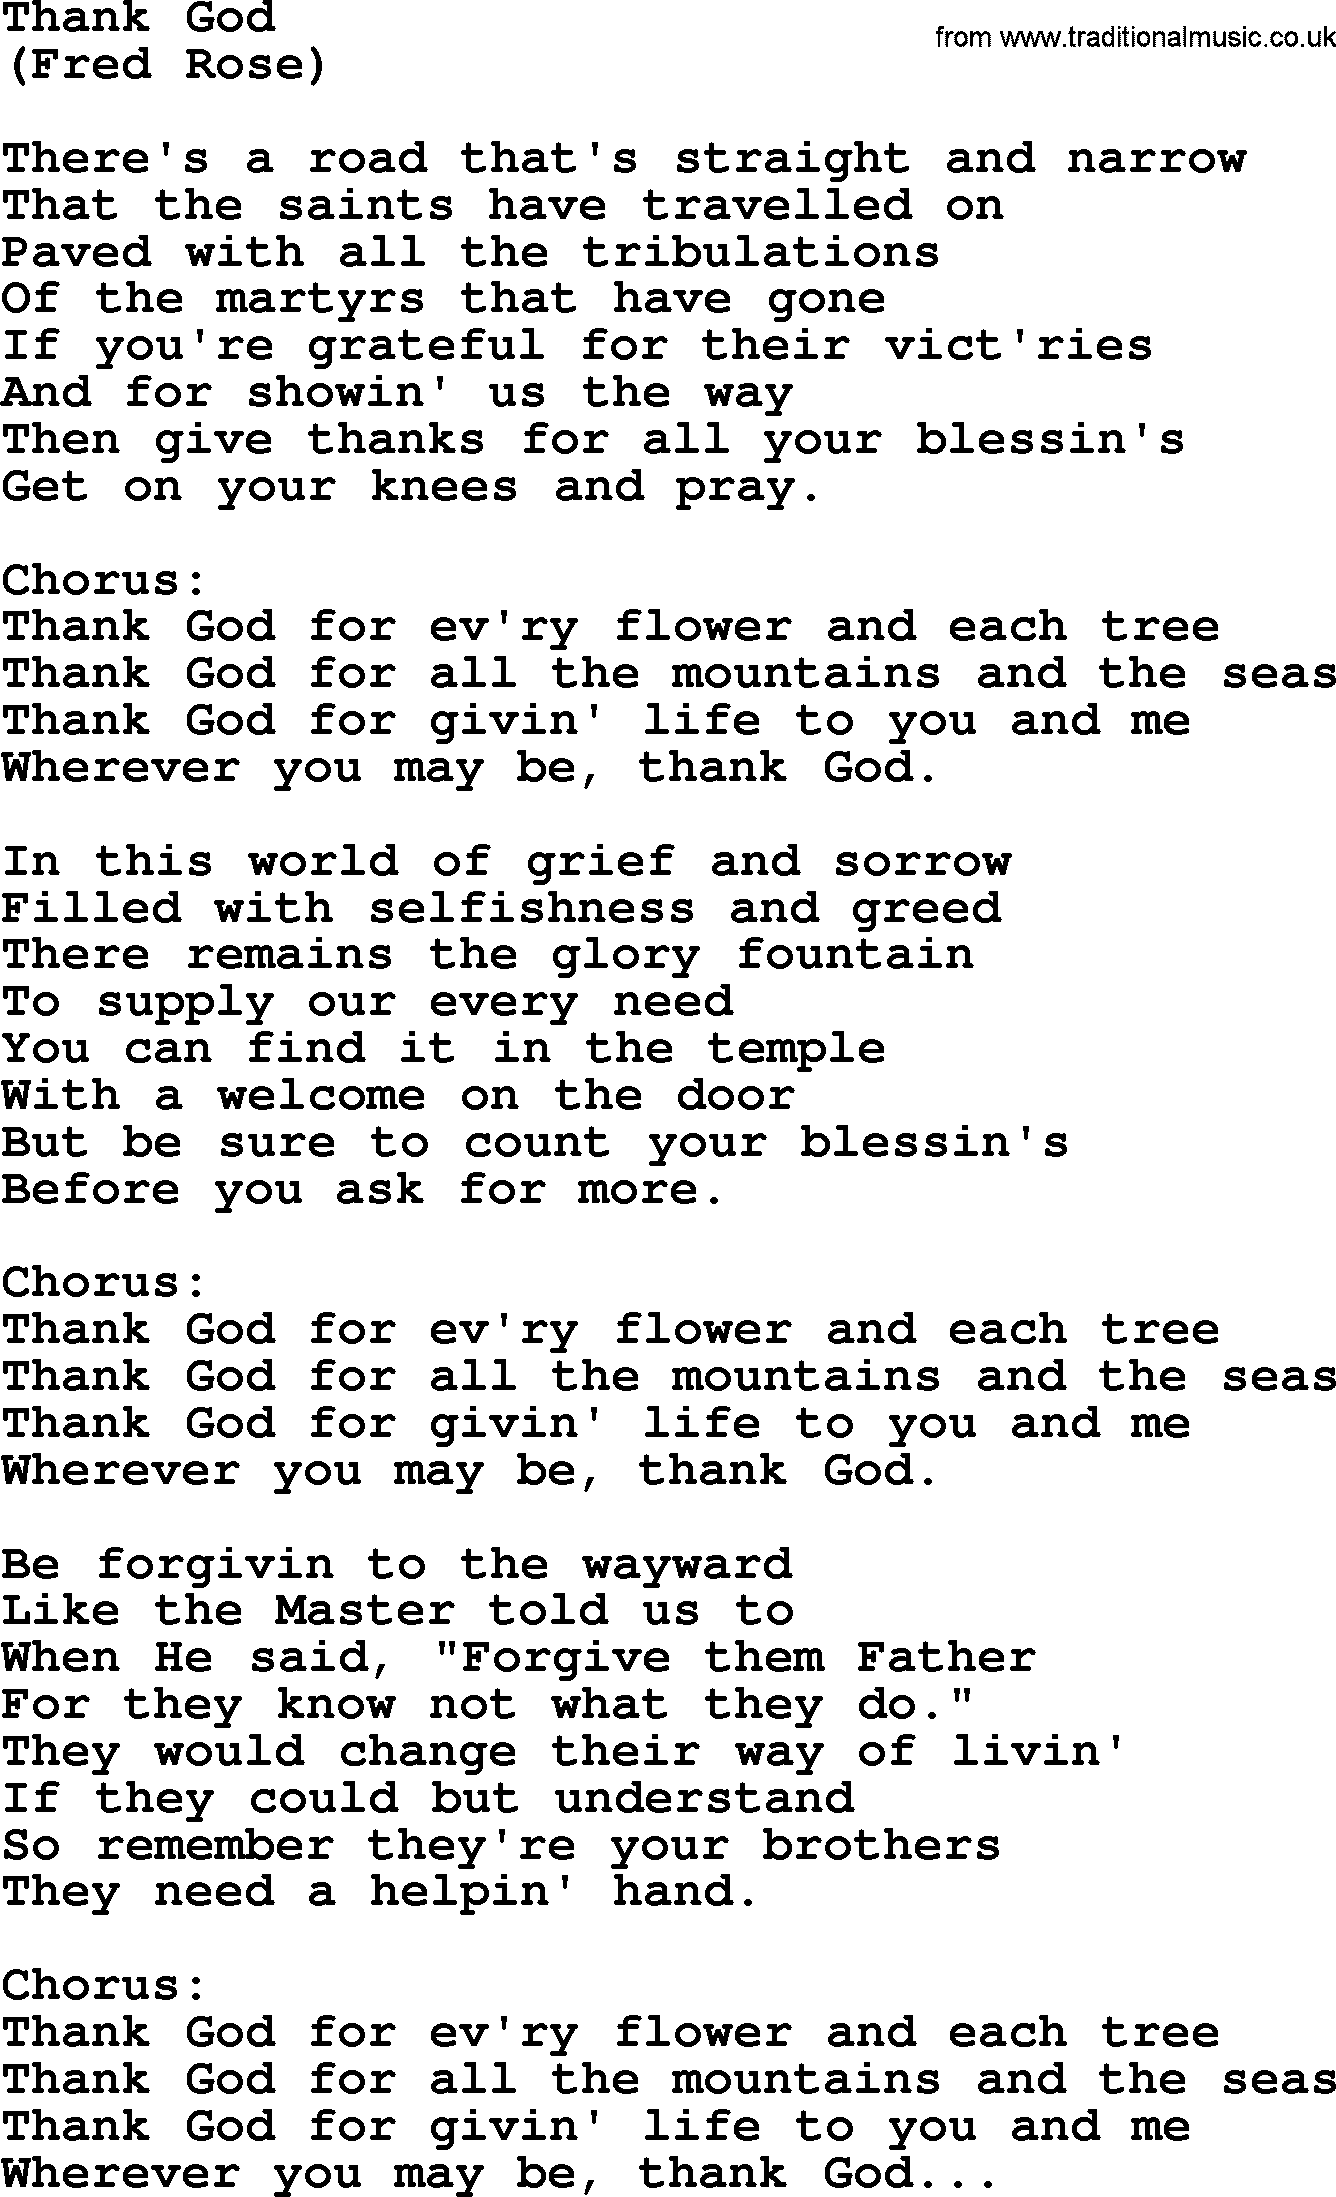 Hank Williams song Thank God, lyrics